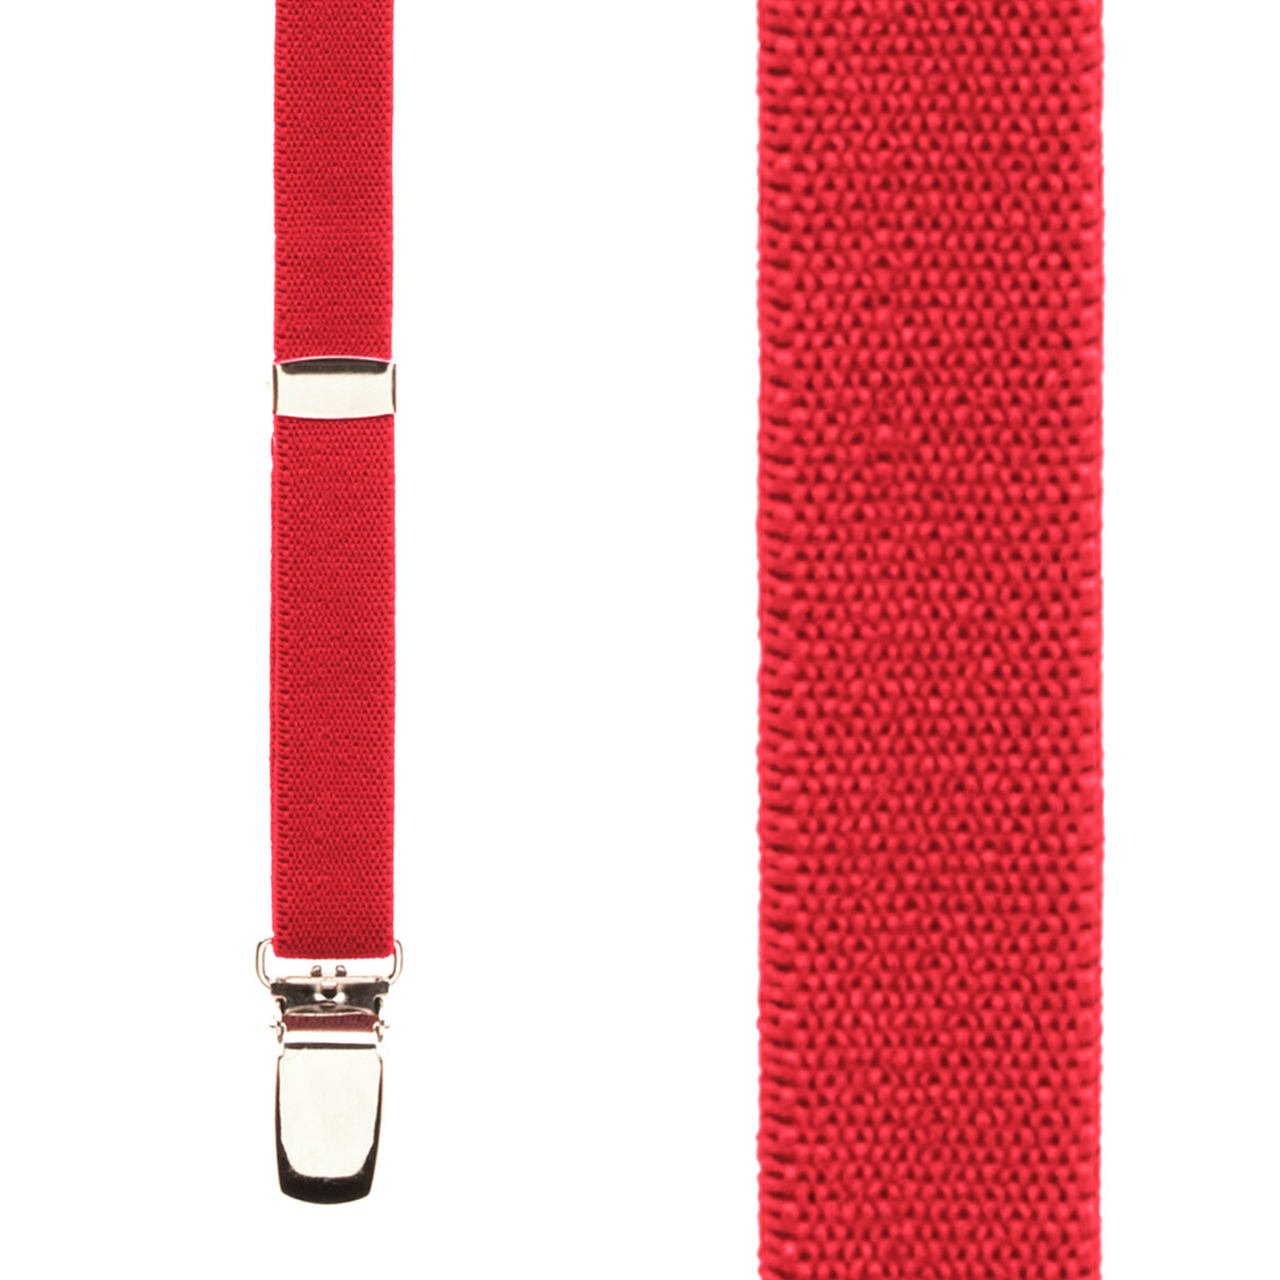 Fashionable Ways to Rock the Red Suspenders Look | SuspenderStore.com Blog